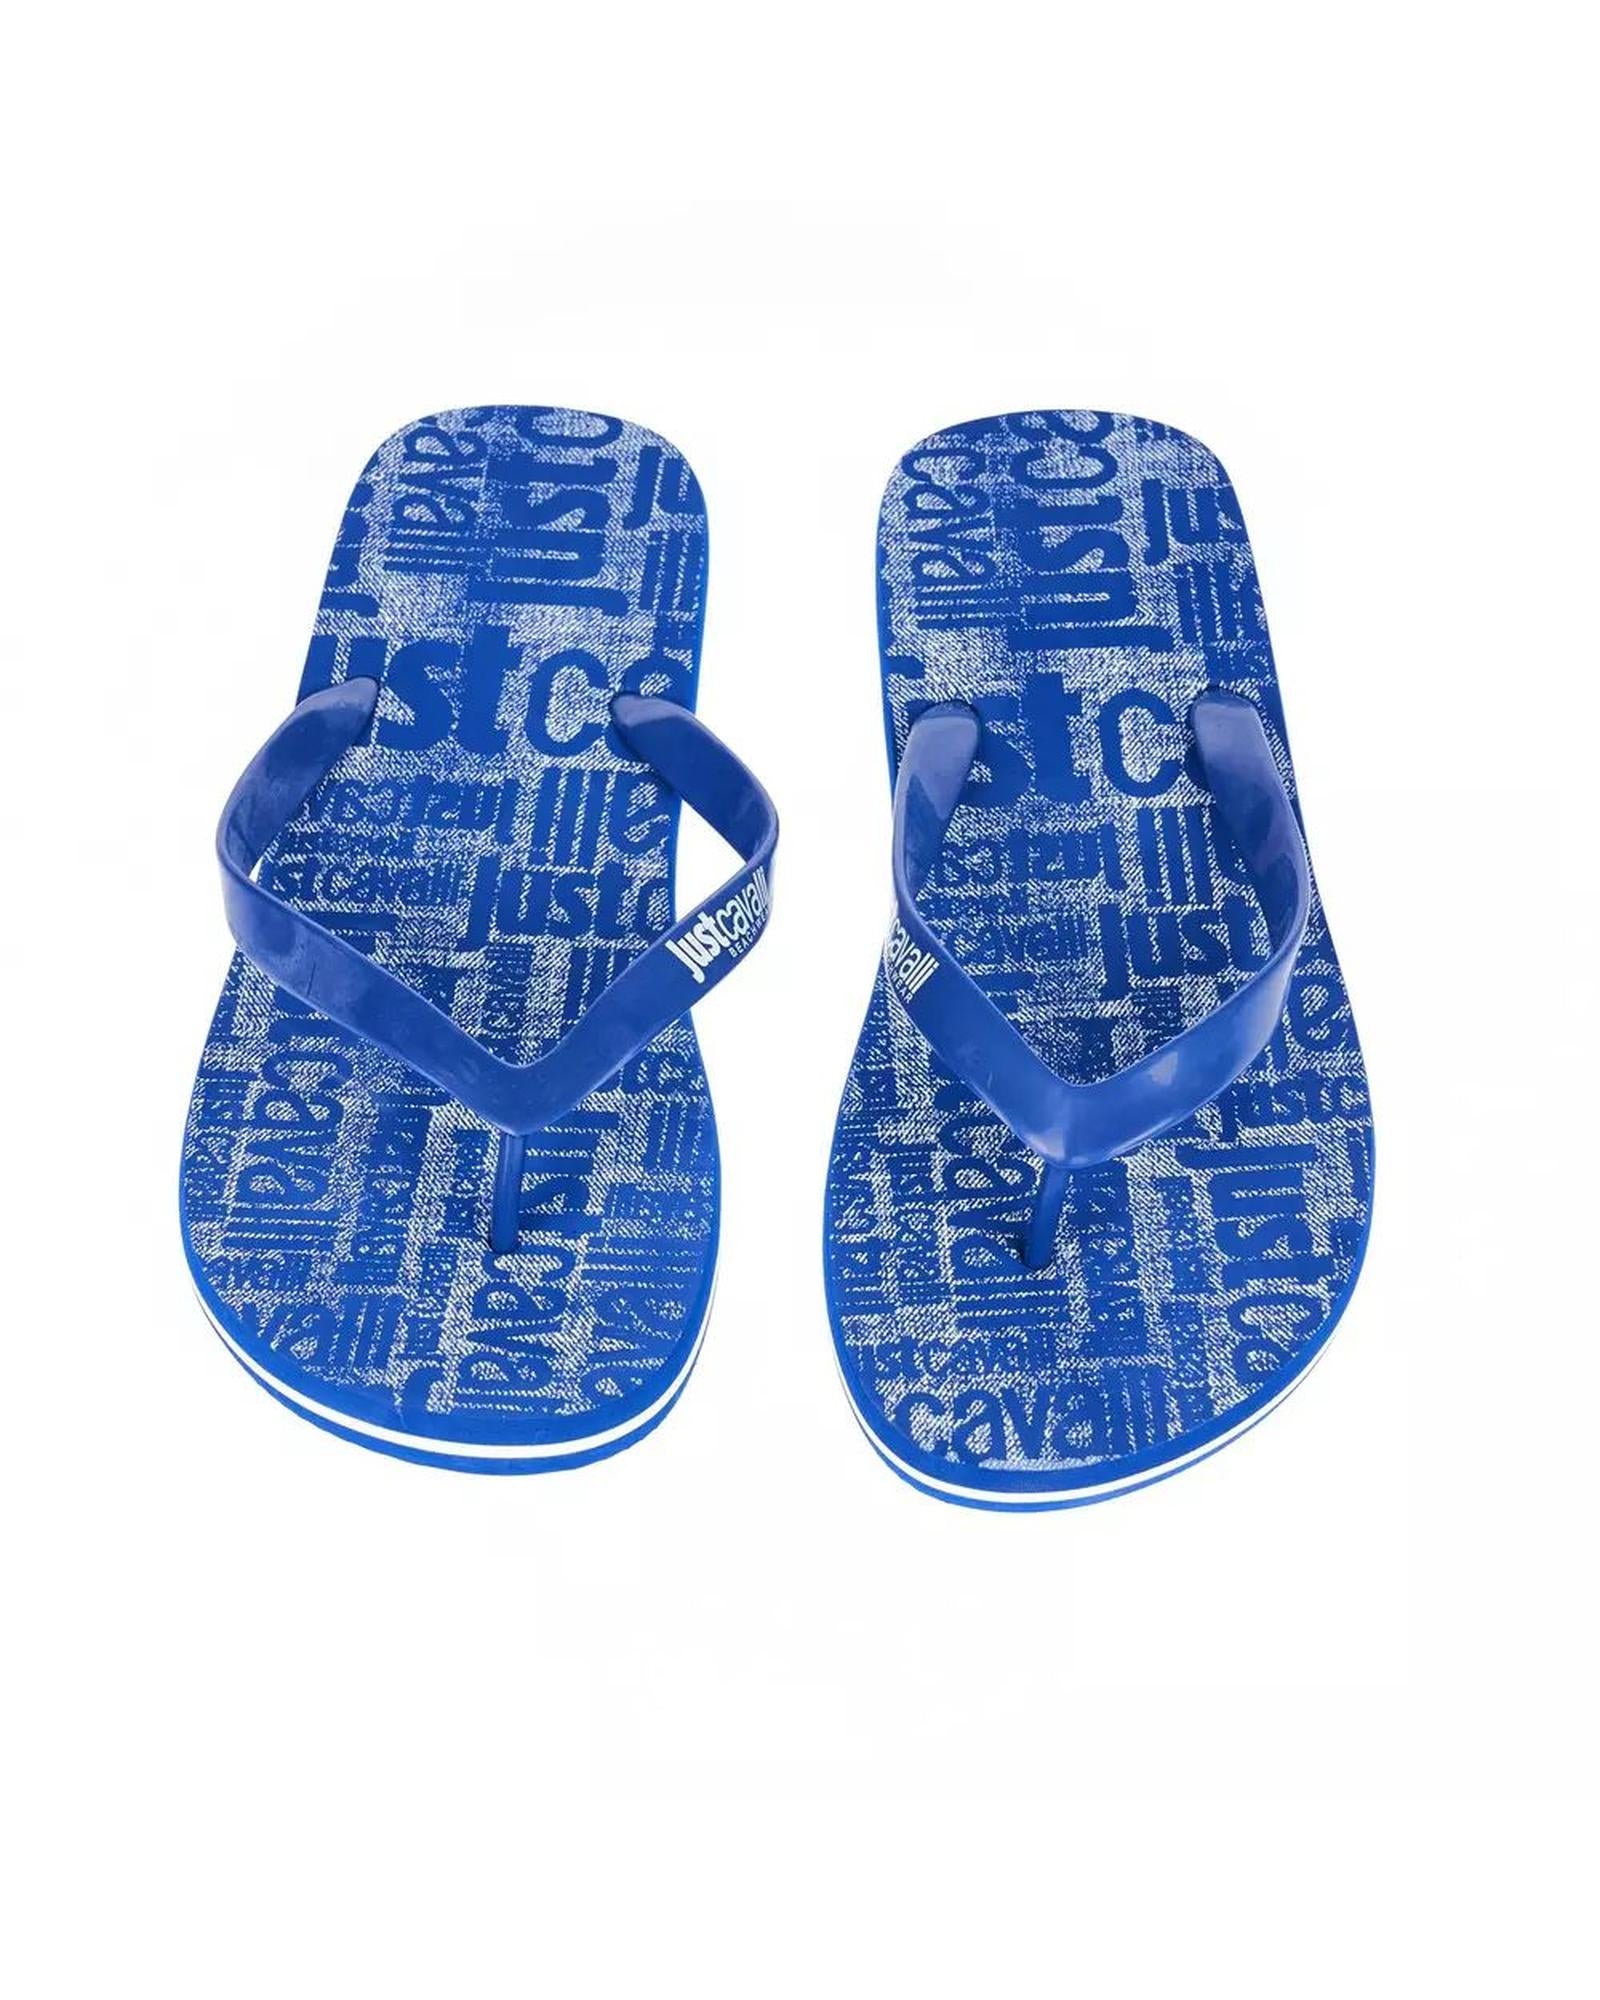 Men's Light Blue EVA Sandal - 46 EU